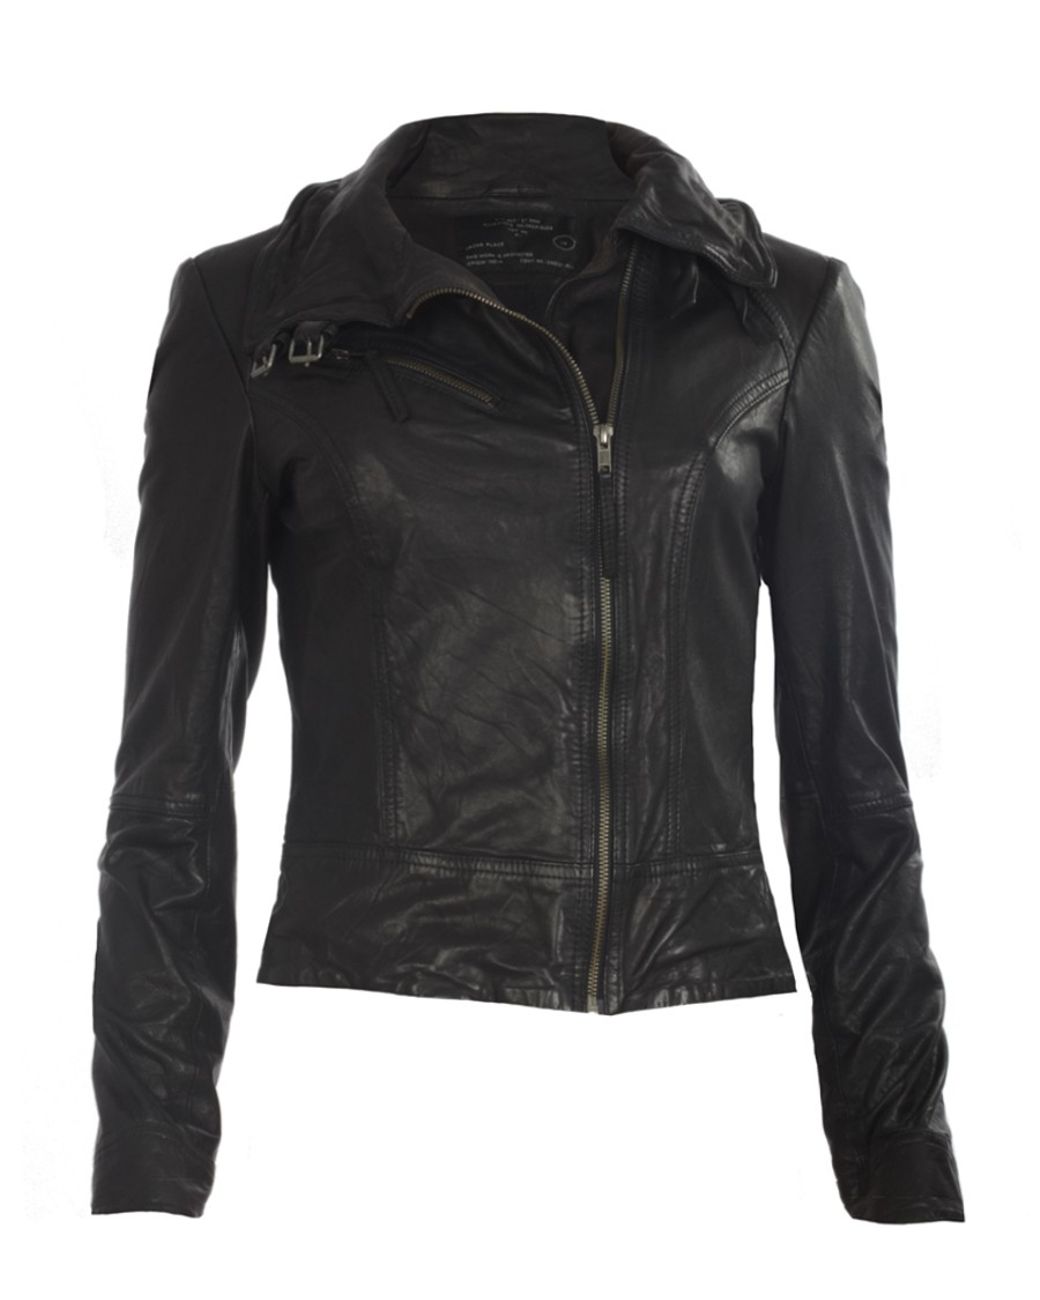 AllSaints Belvedere Leather Jacket in Black | Lyst Australia